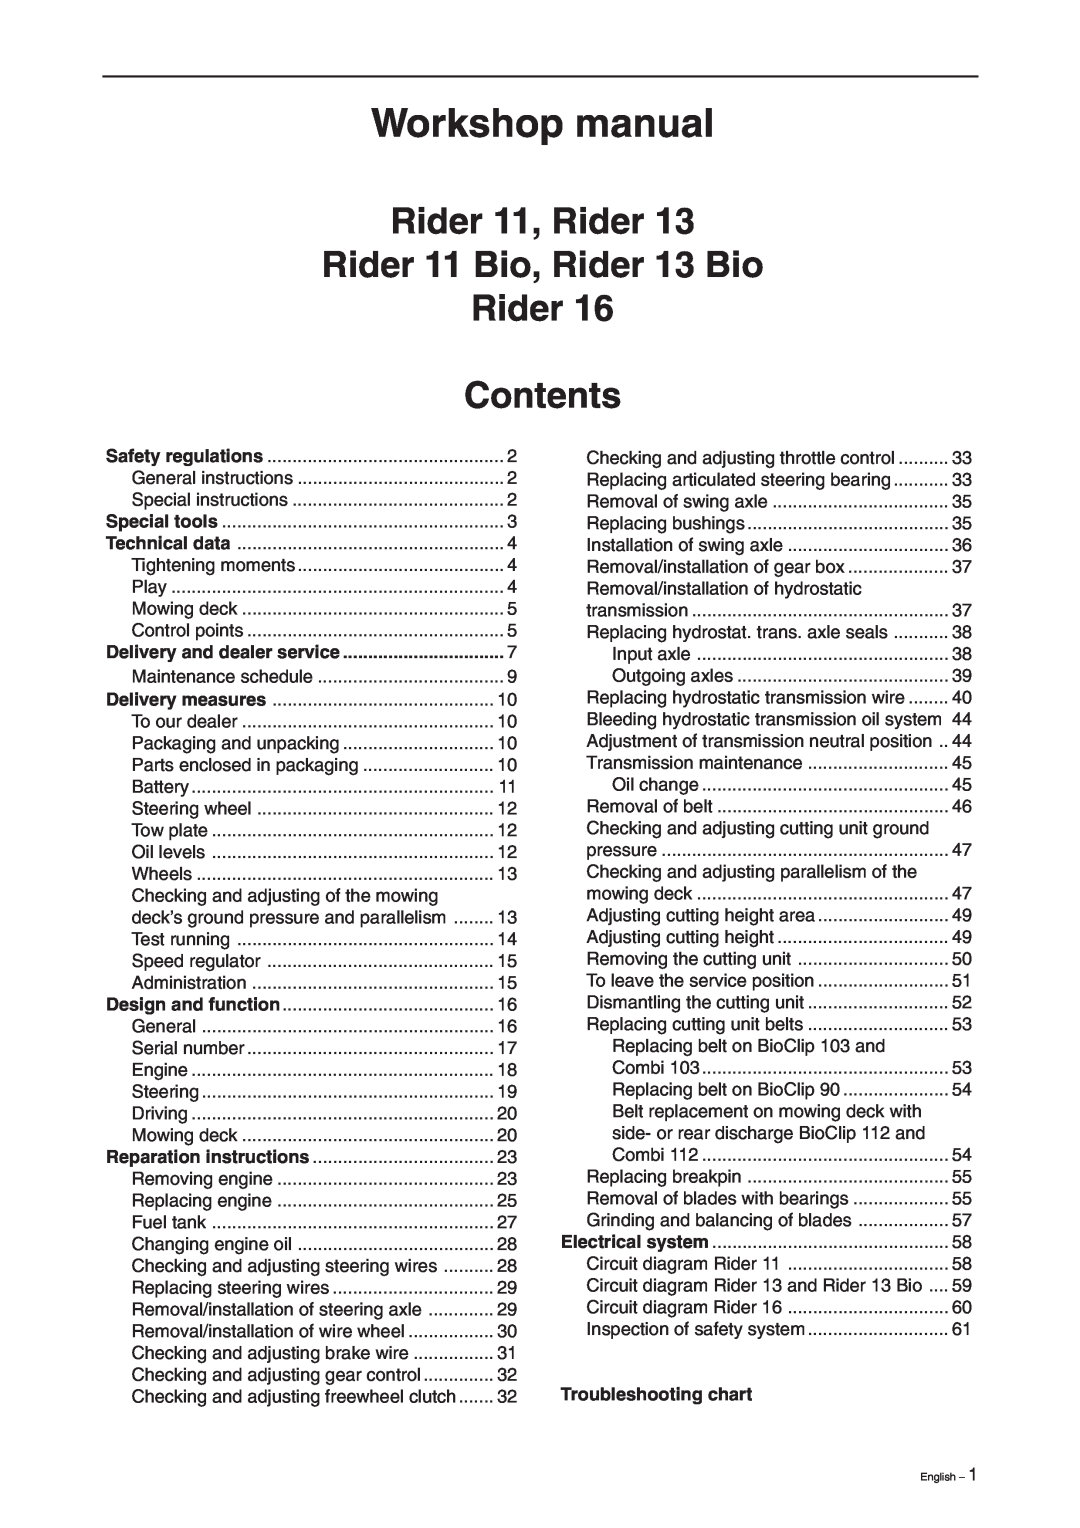 Briggs & Stratton RIDER 13 BIO, RIDER 11 Rider 11, Rider Rider 11 Bio, Rider 13 Bio Rider Contents, Troubleshooting chart 